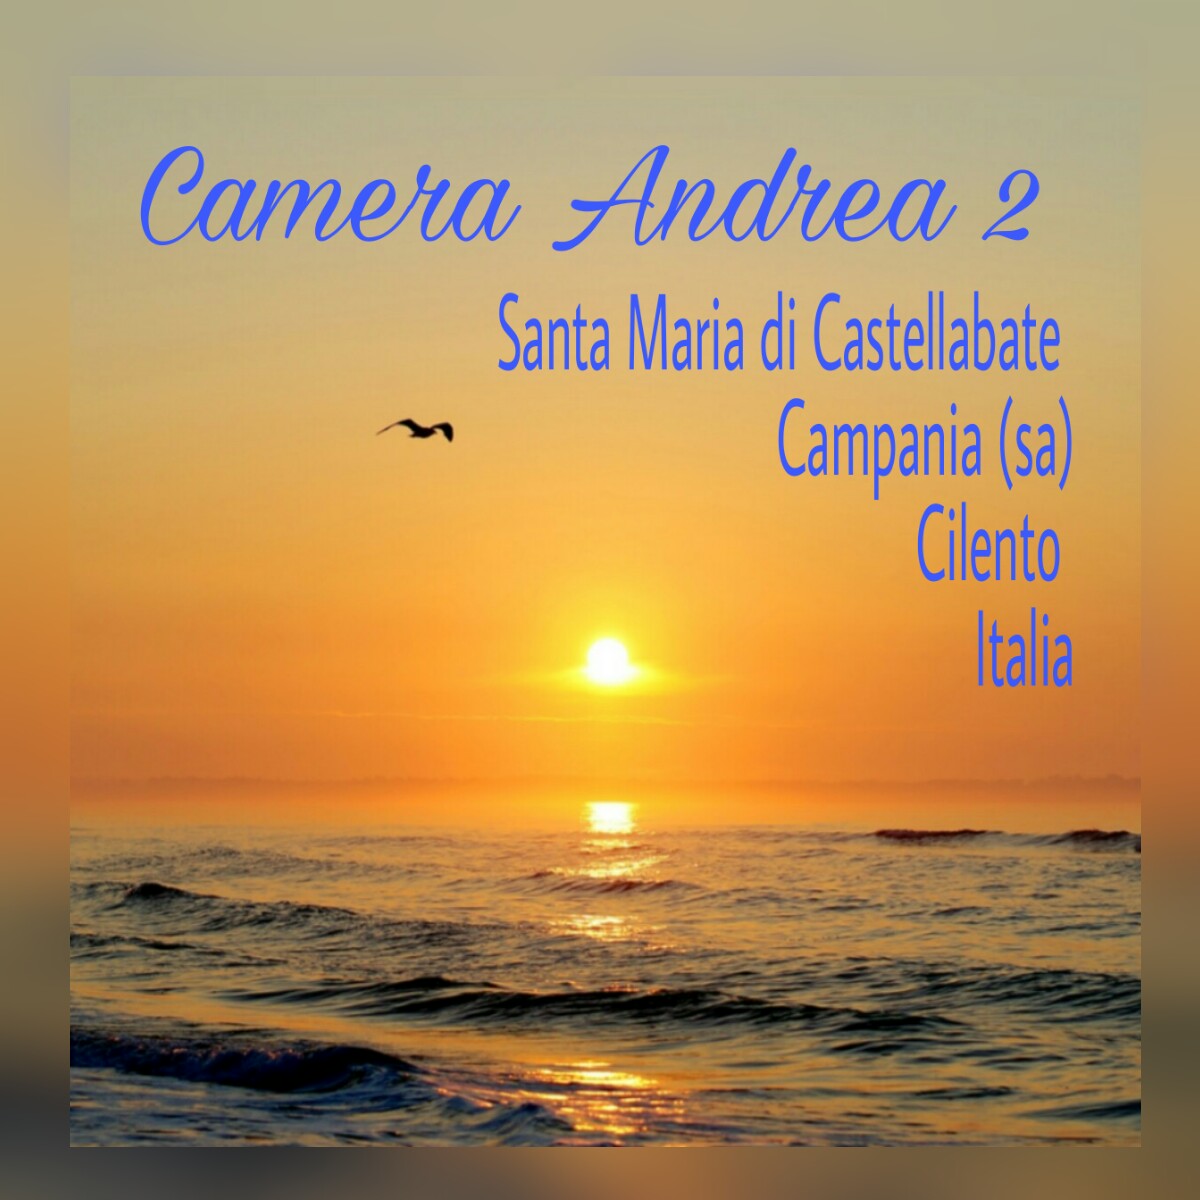 Camera Andrea 2 